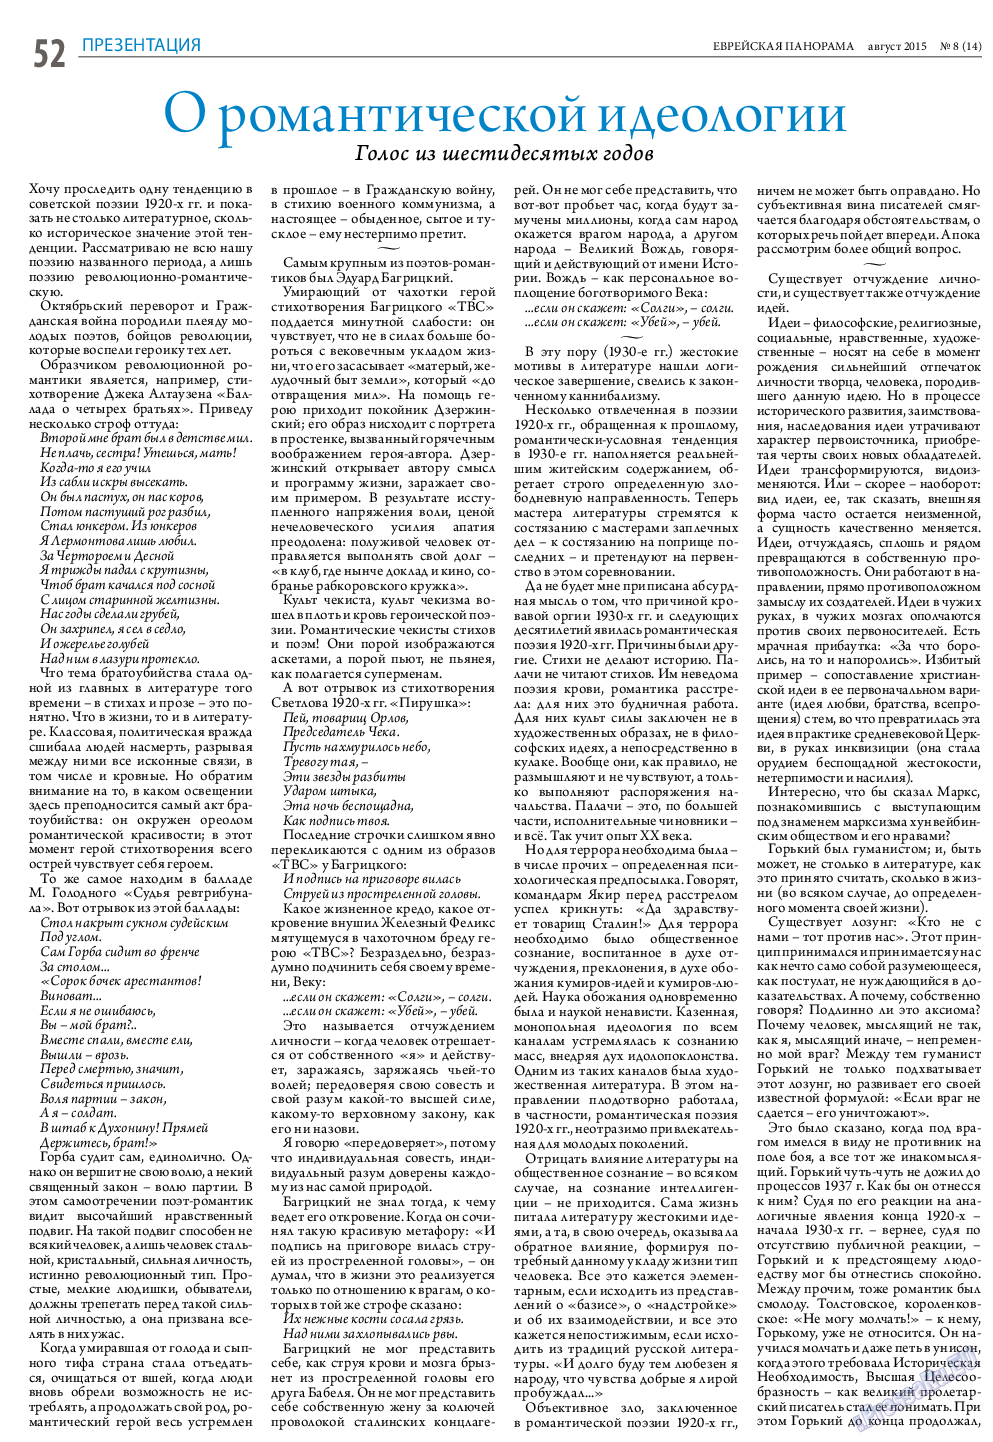 Еврейская панорама, газета. 2015 №8 стр.52